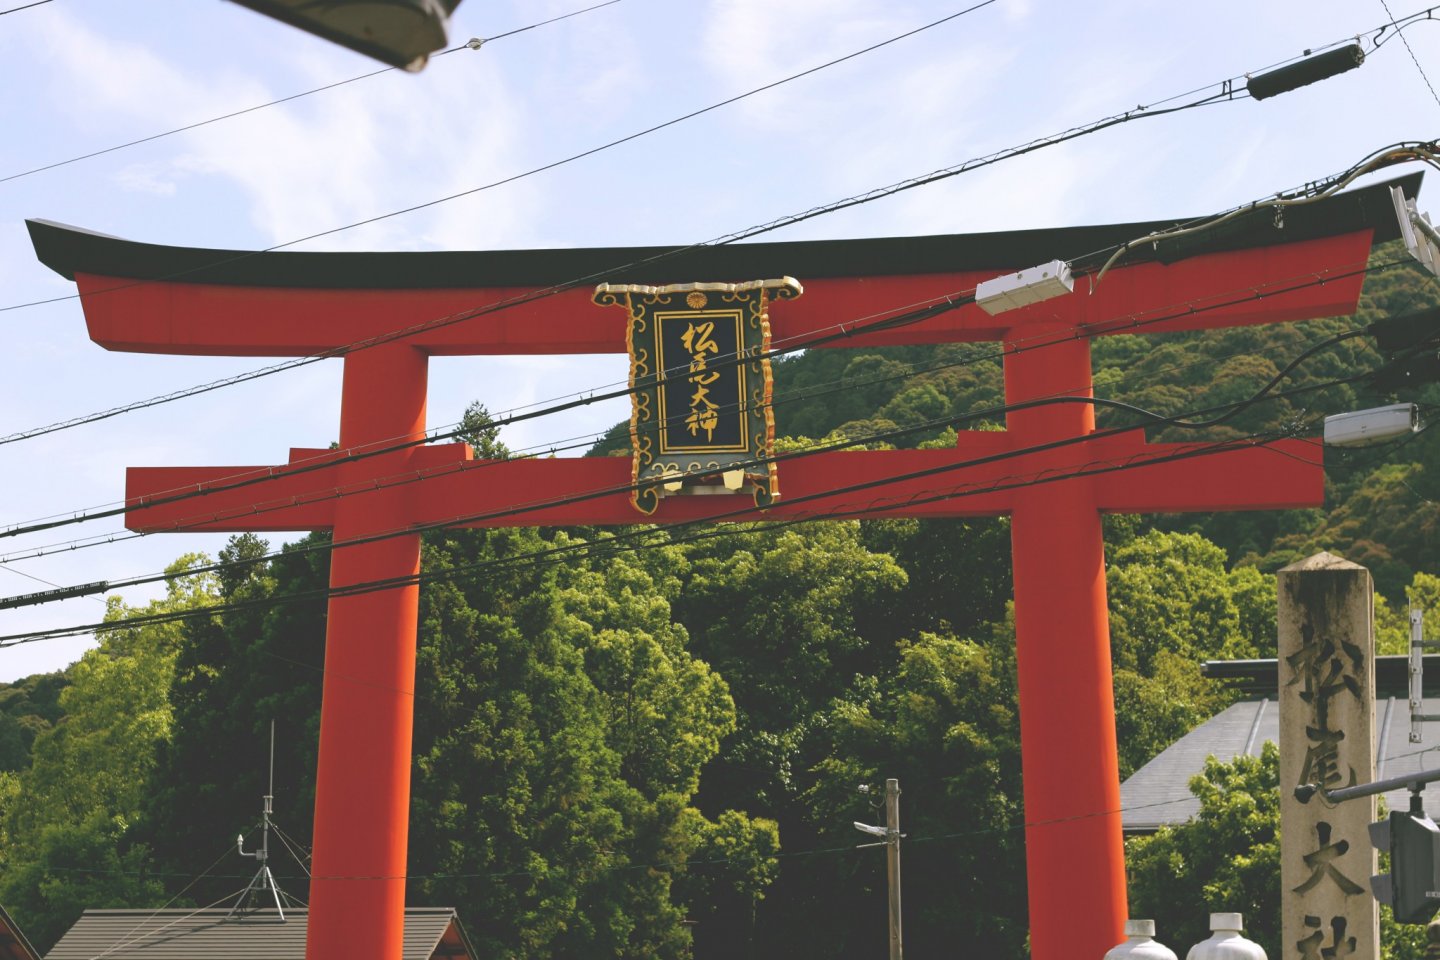 The main torii gate to the shrine grounds